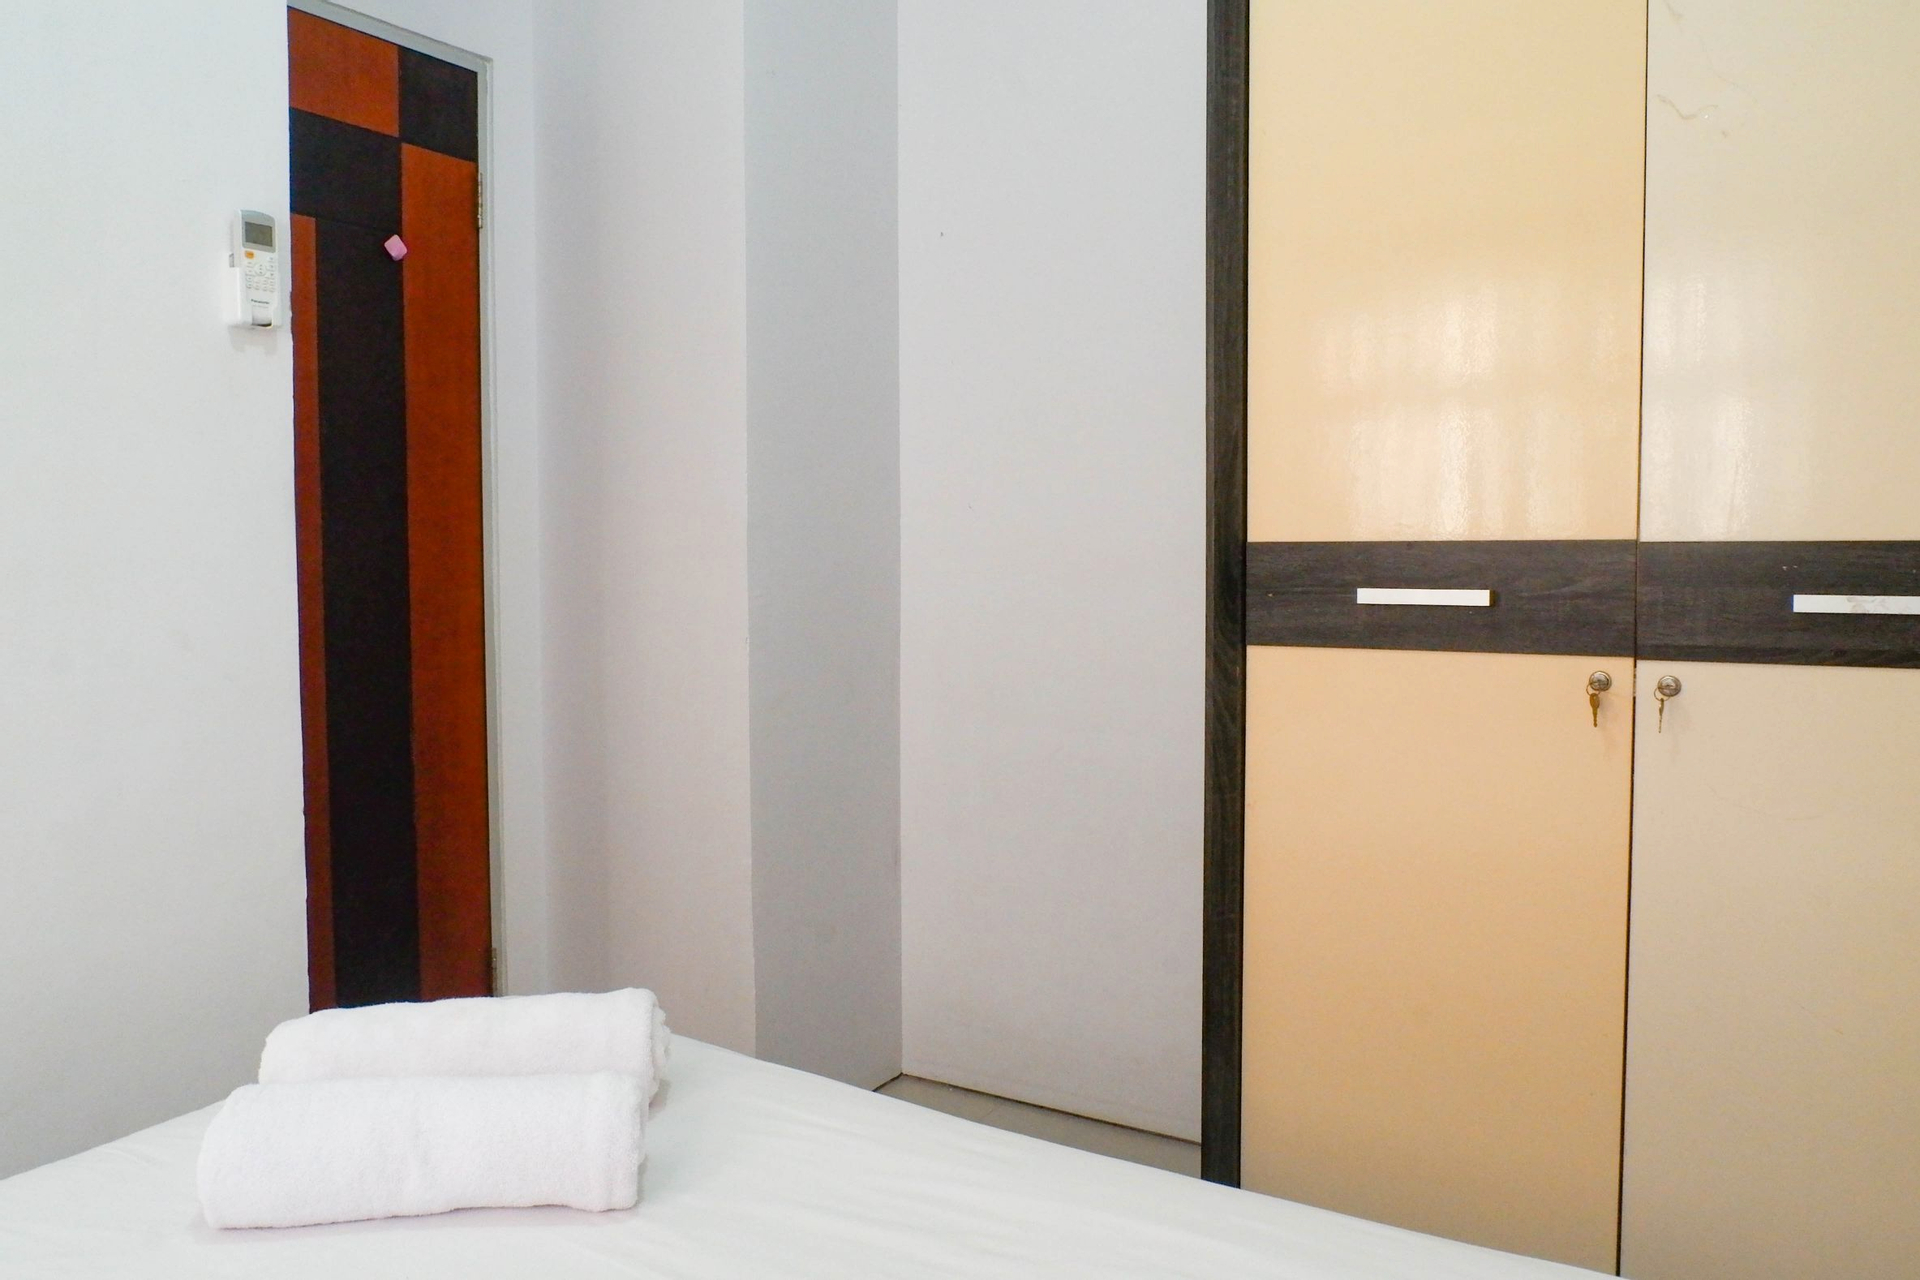 Bedroom 2, Best Deal & Strategic 2BR Apartment at Gunawangsa Merr By Travelio, Surabaya